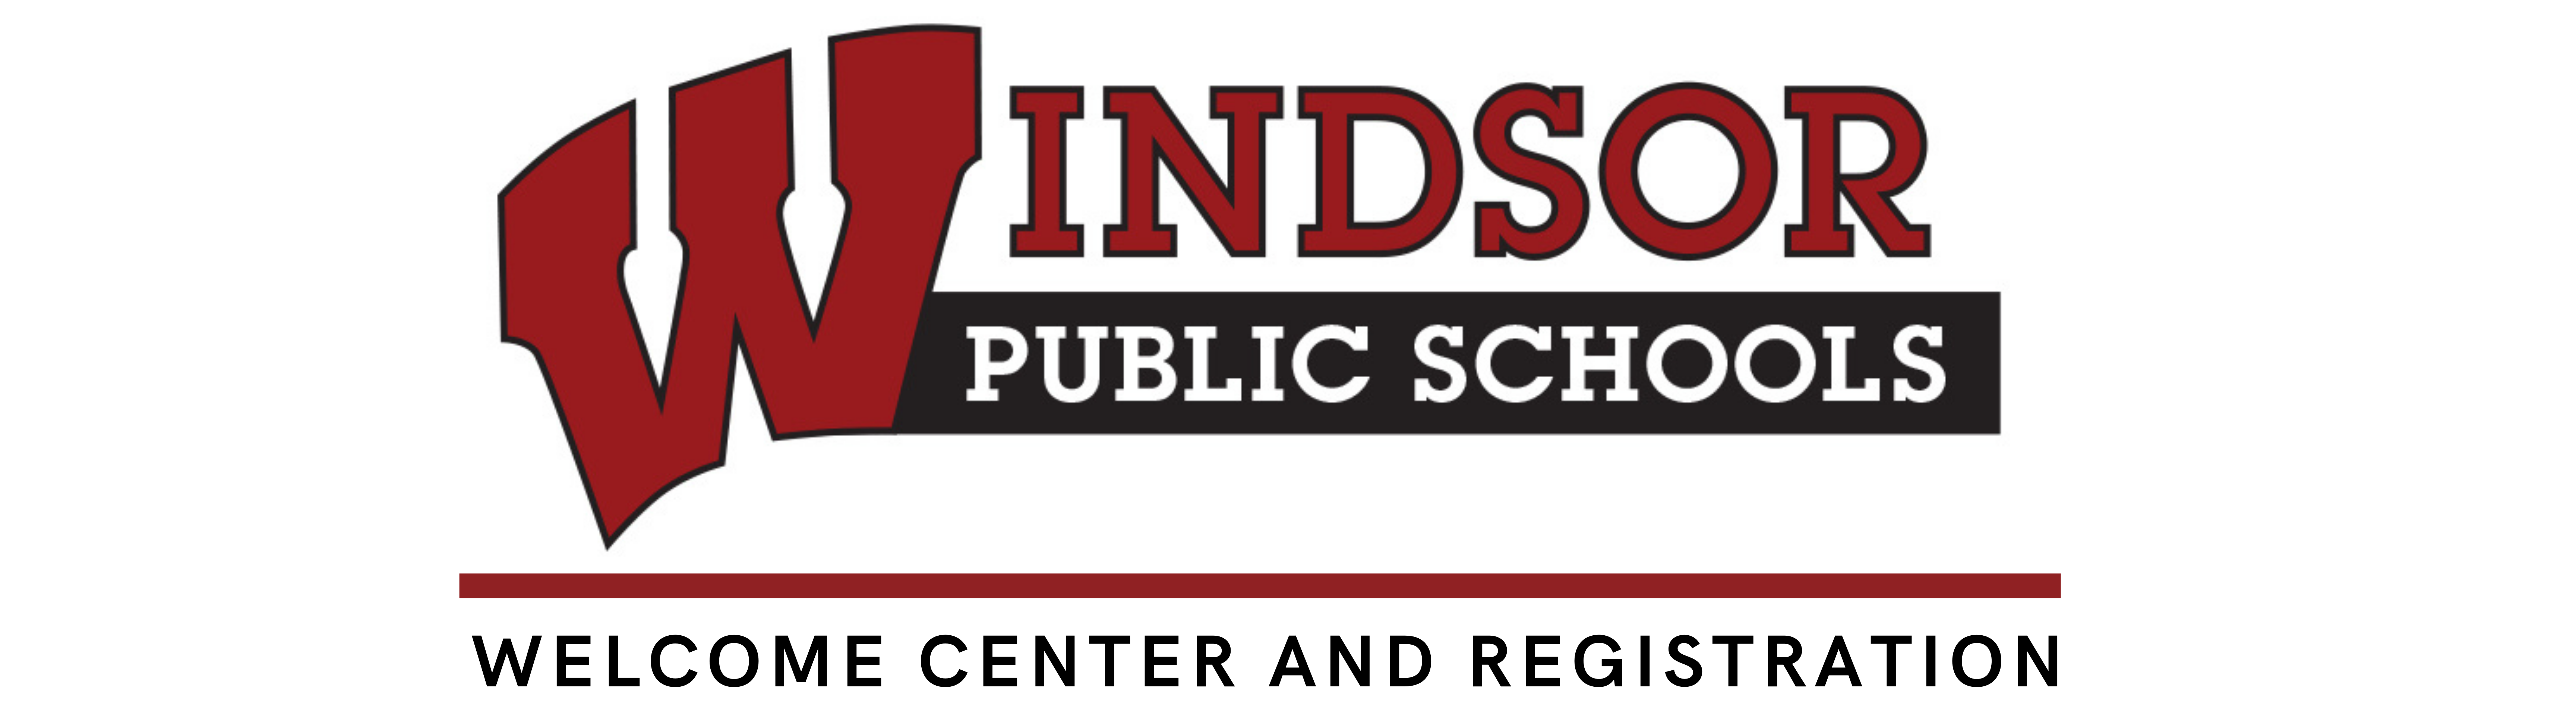 windsor Public schools logo welcome center and registration